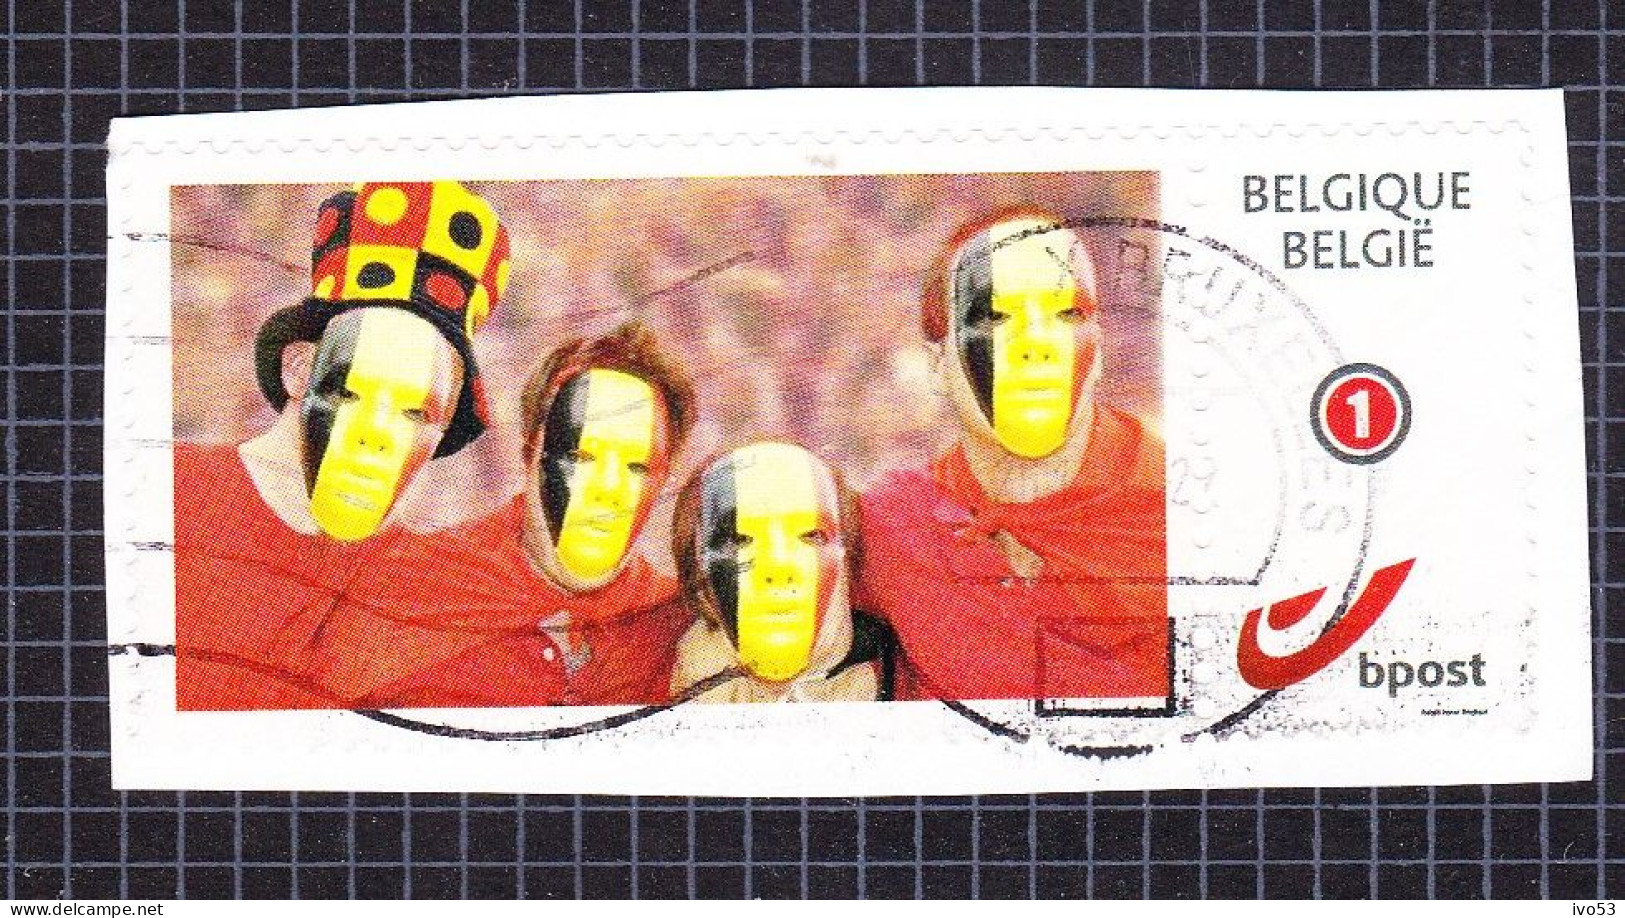 2011 Nr 4182/83 Duo-stamp / My Stamp,gestempeld Op Fragment. - Usados